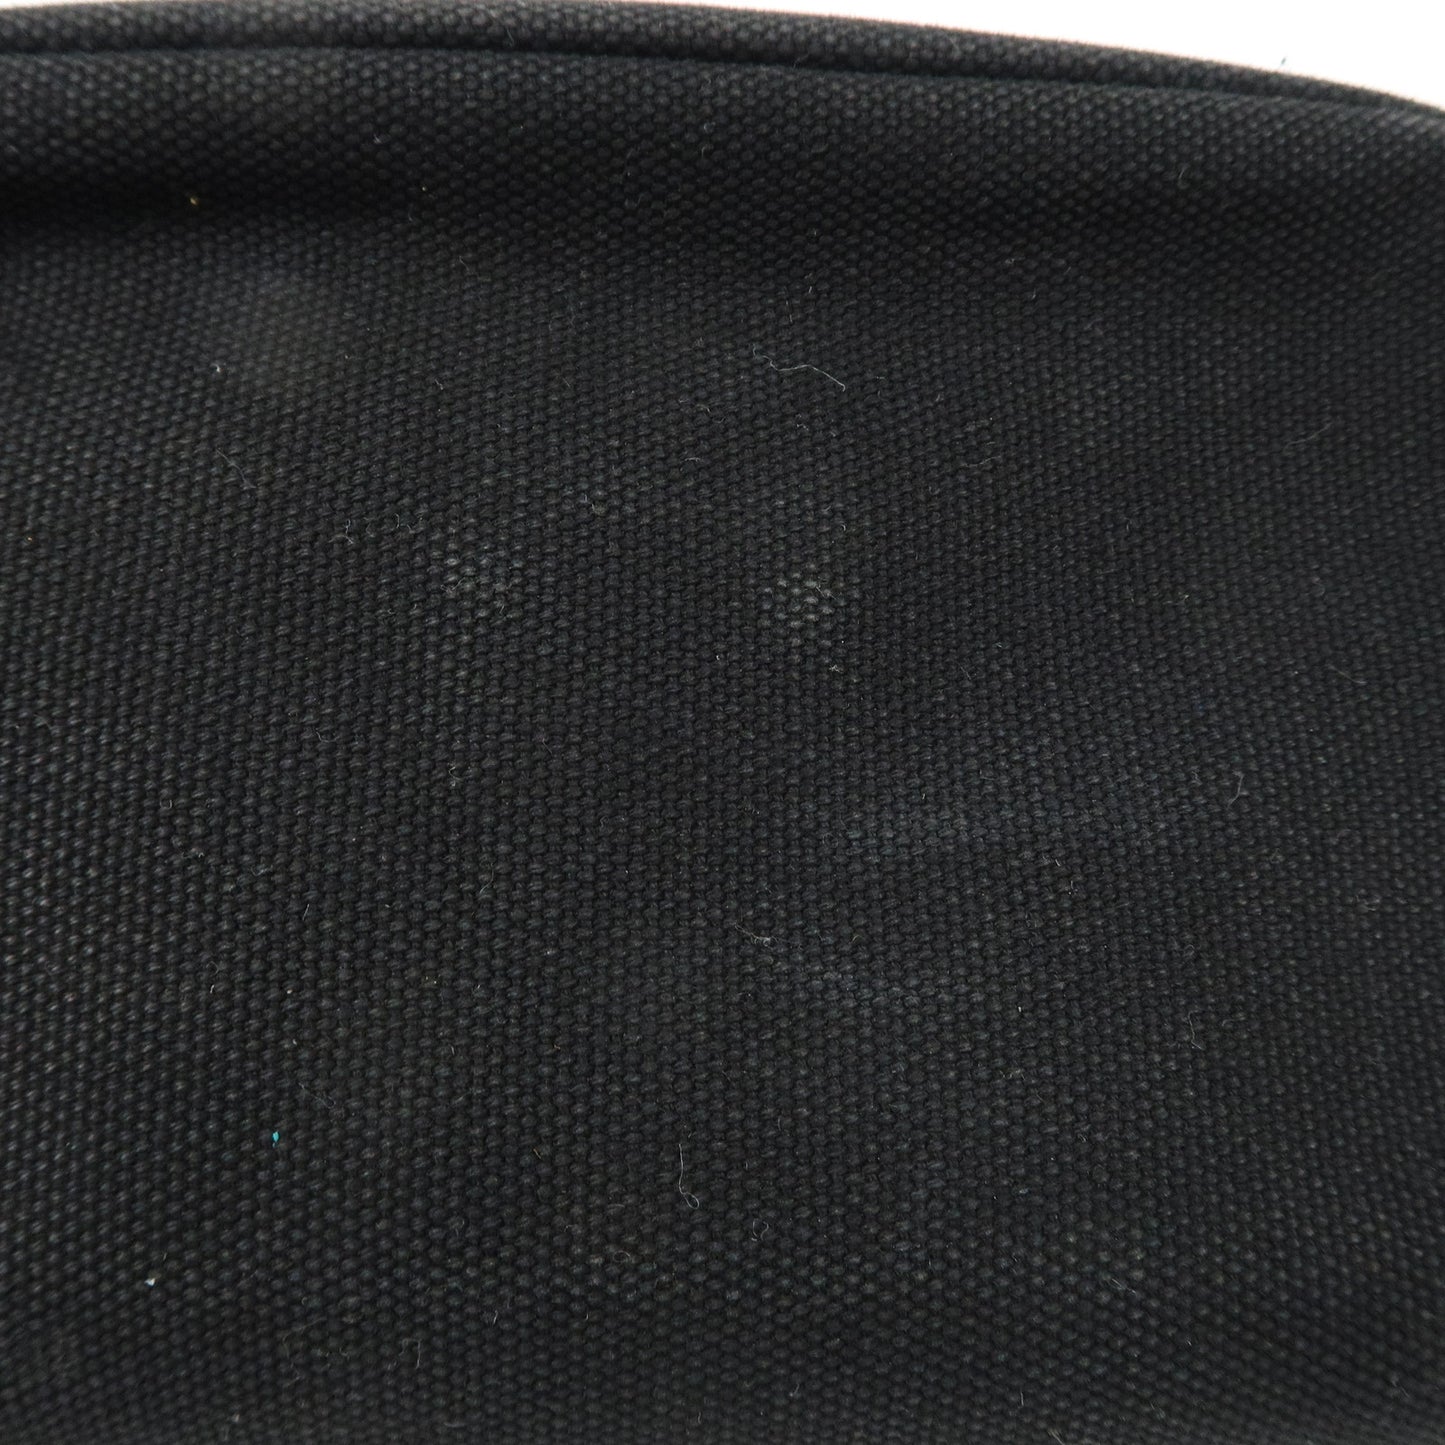 PRADA Set of 2 Logo Canvas Leather Canapa Pouch Black Blue 1NA021